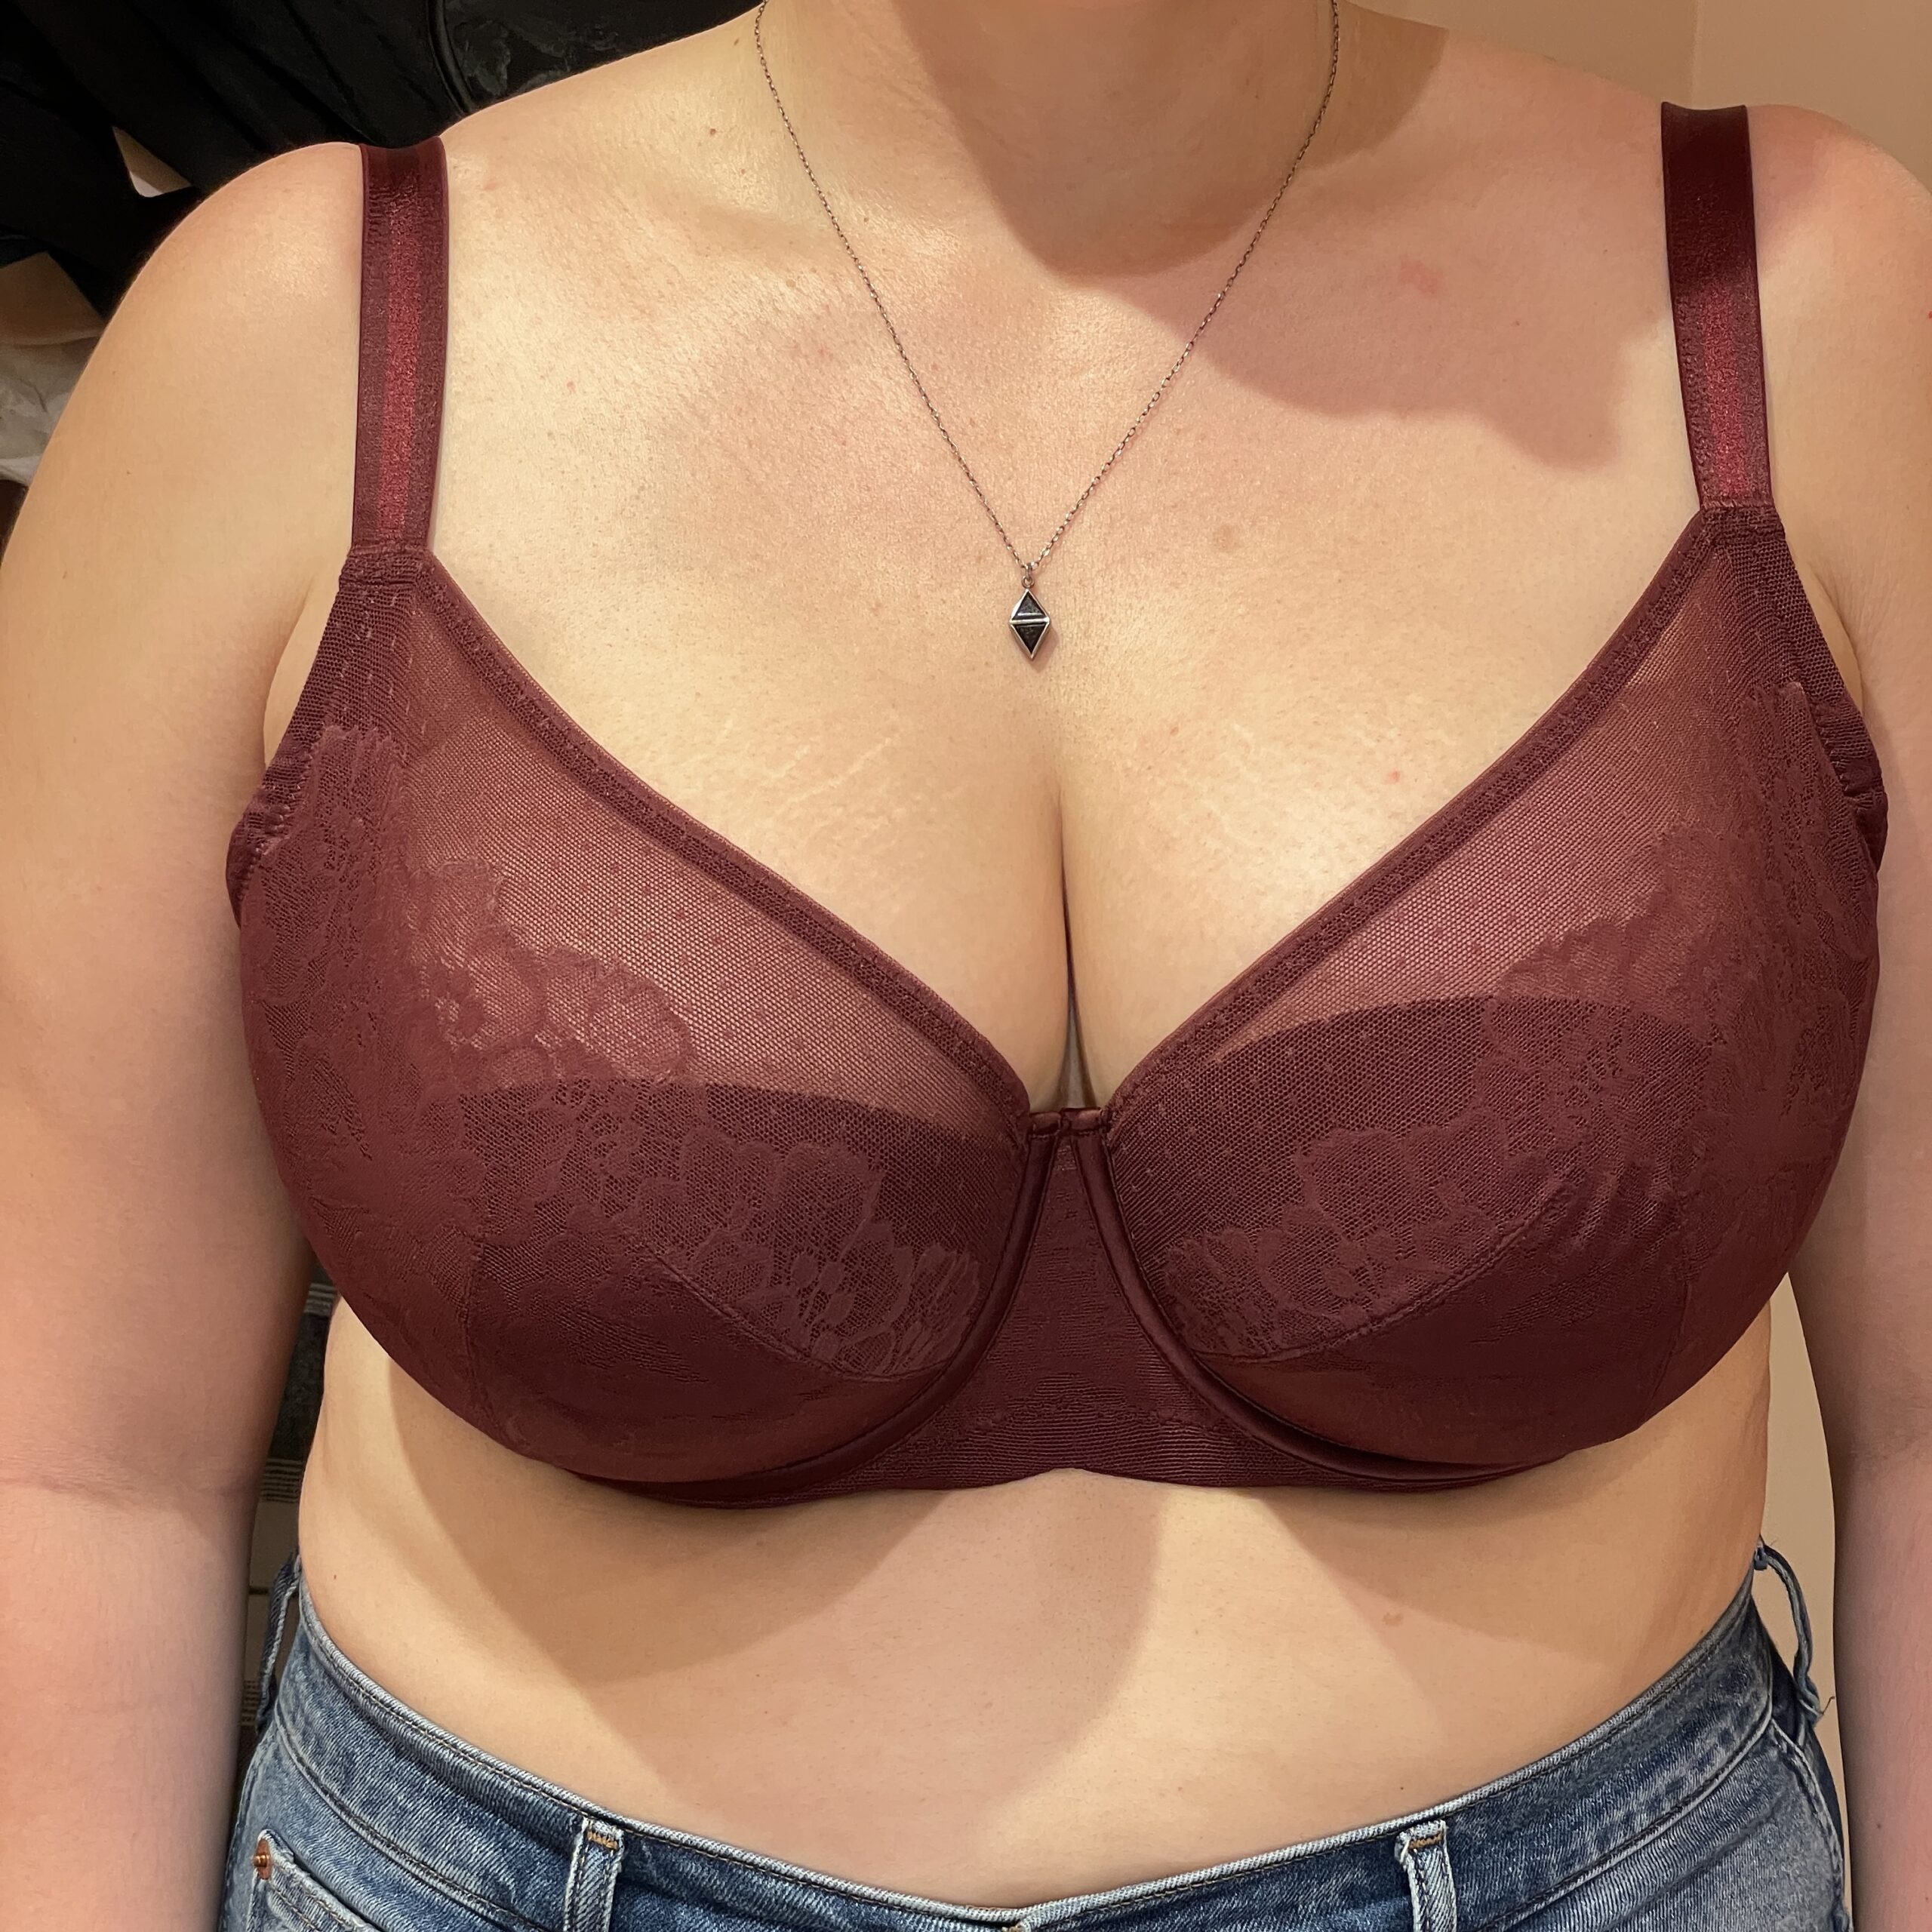 38g boob size